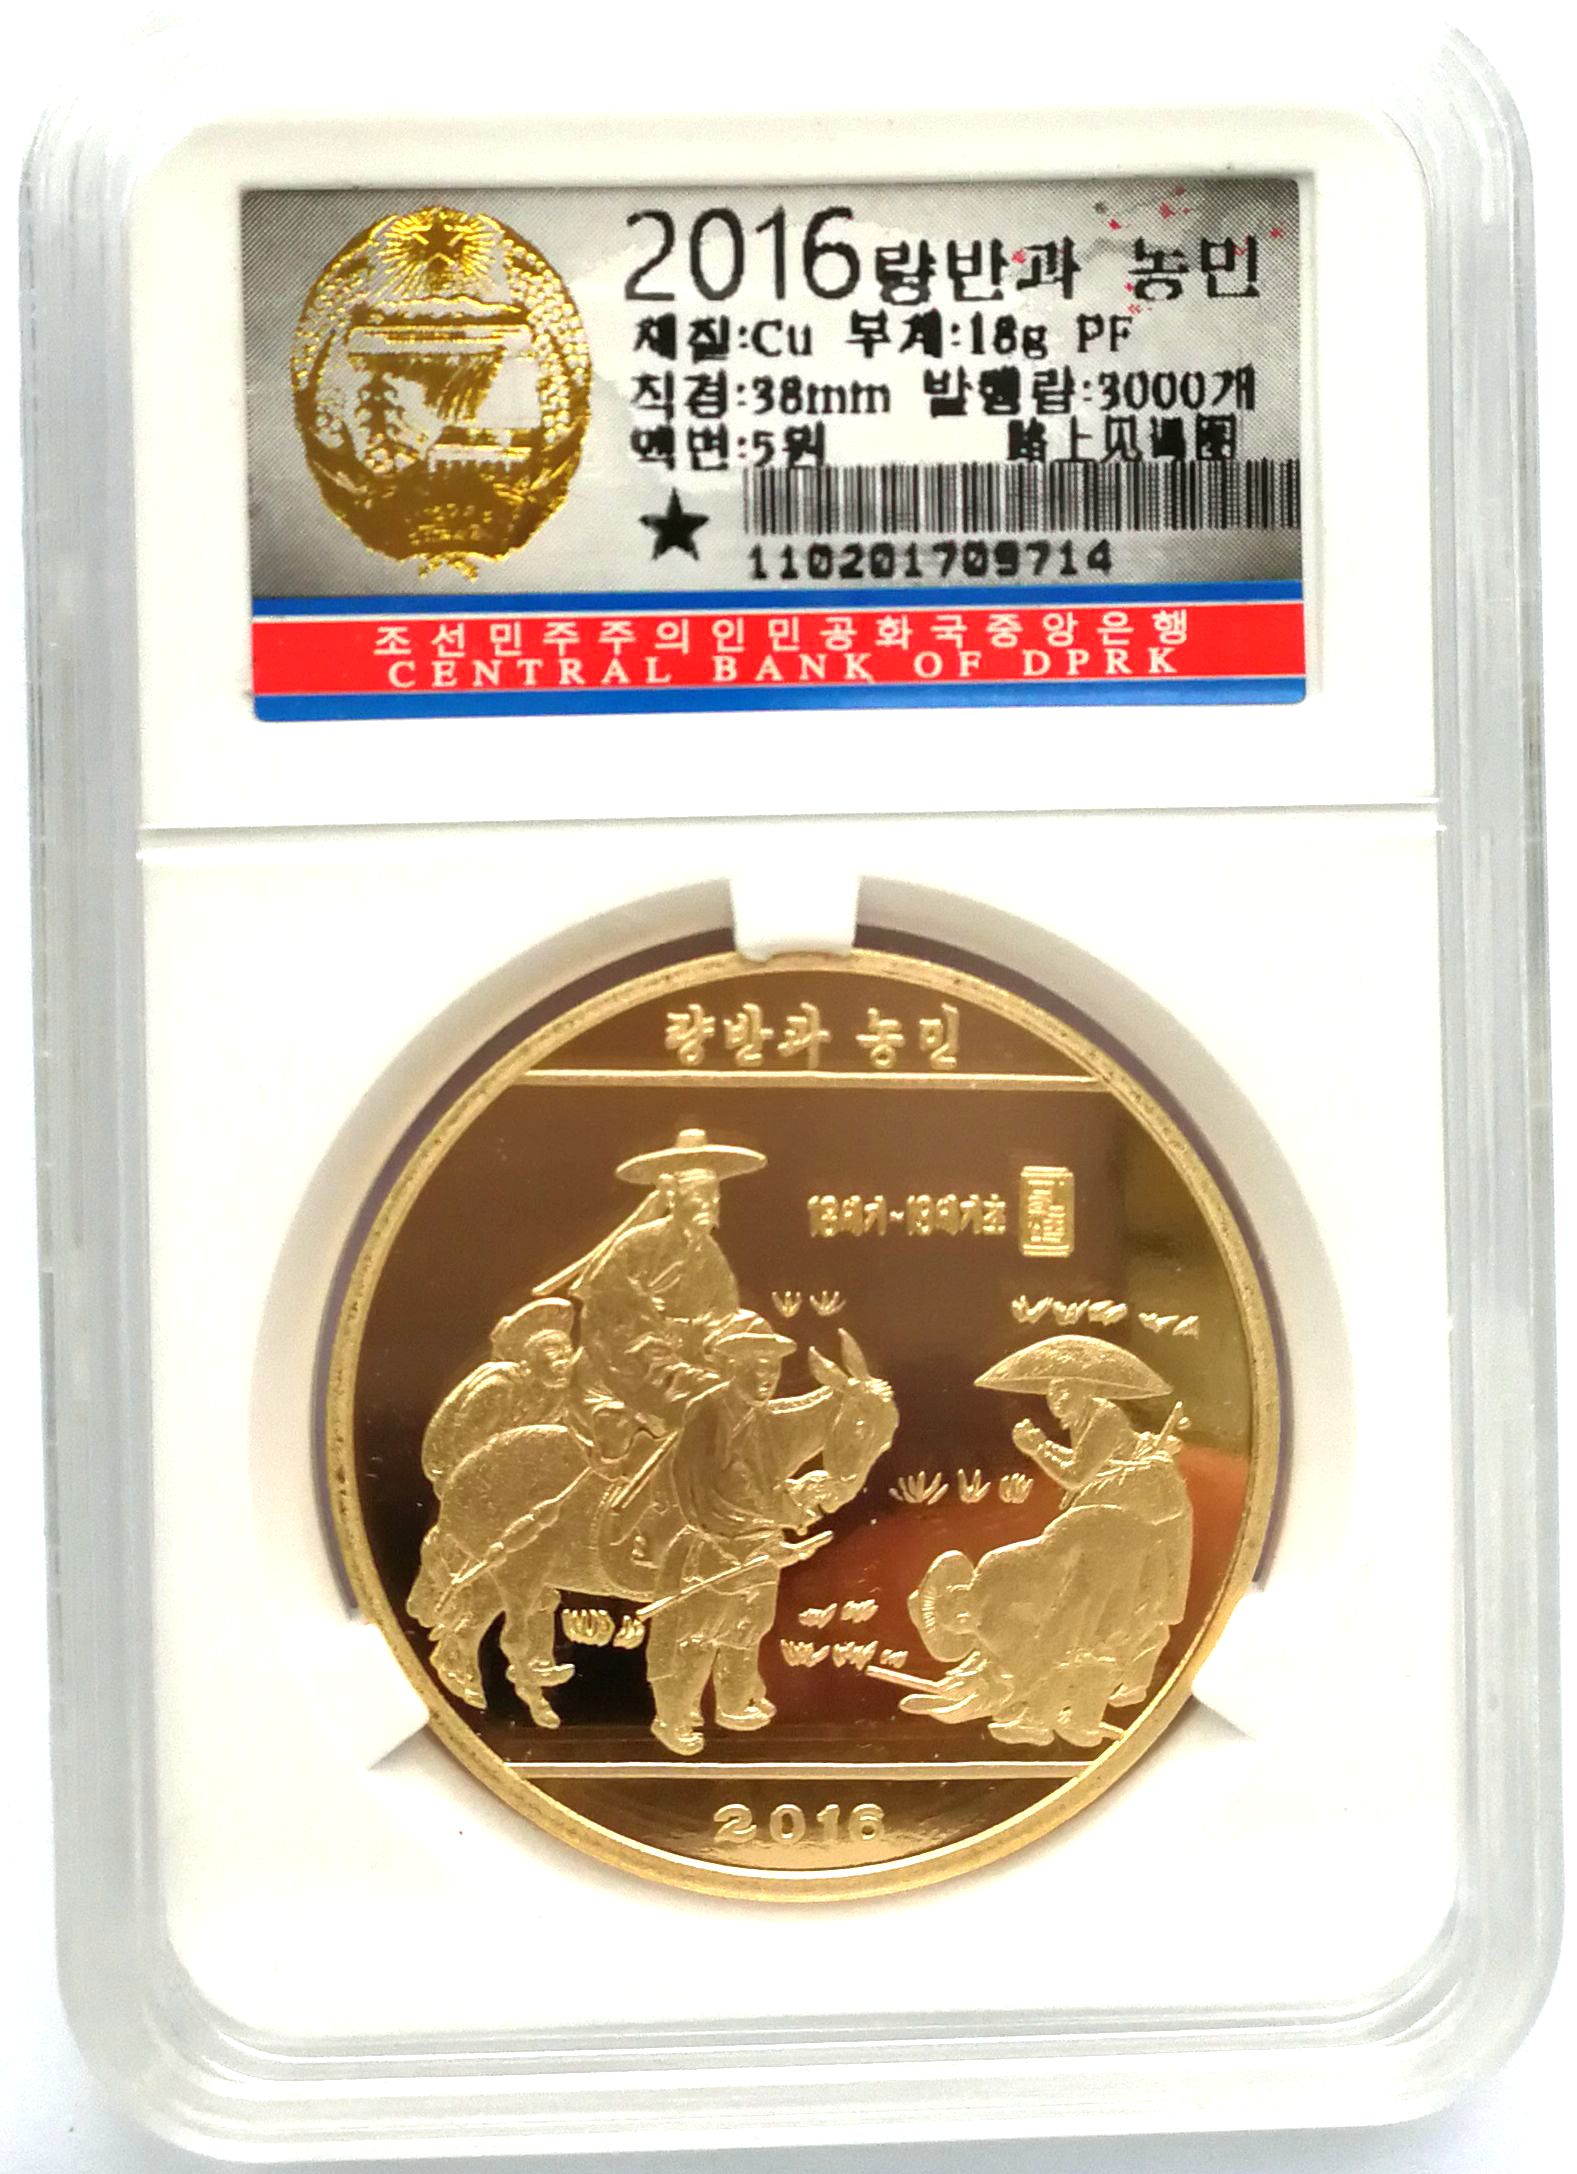 L3209, Korea Painting Coin "Meeting on Road", Brass 2016, Korean Original Box